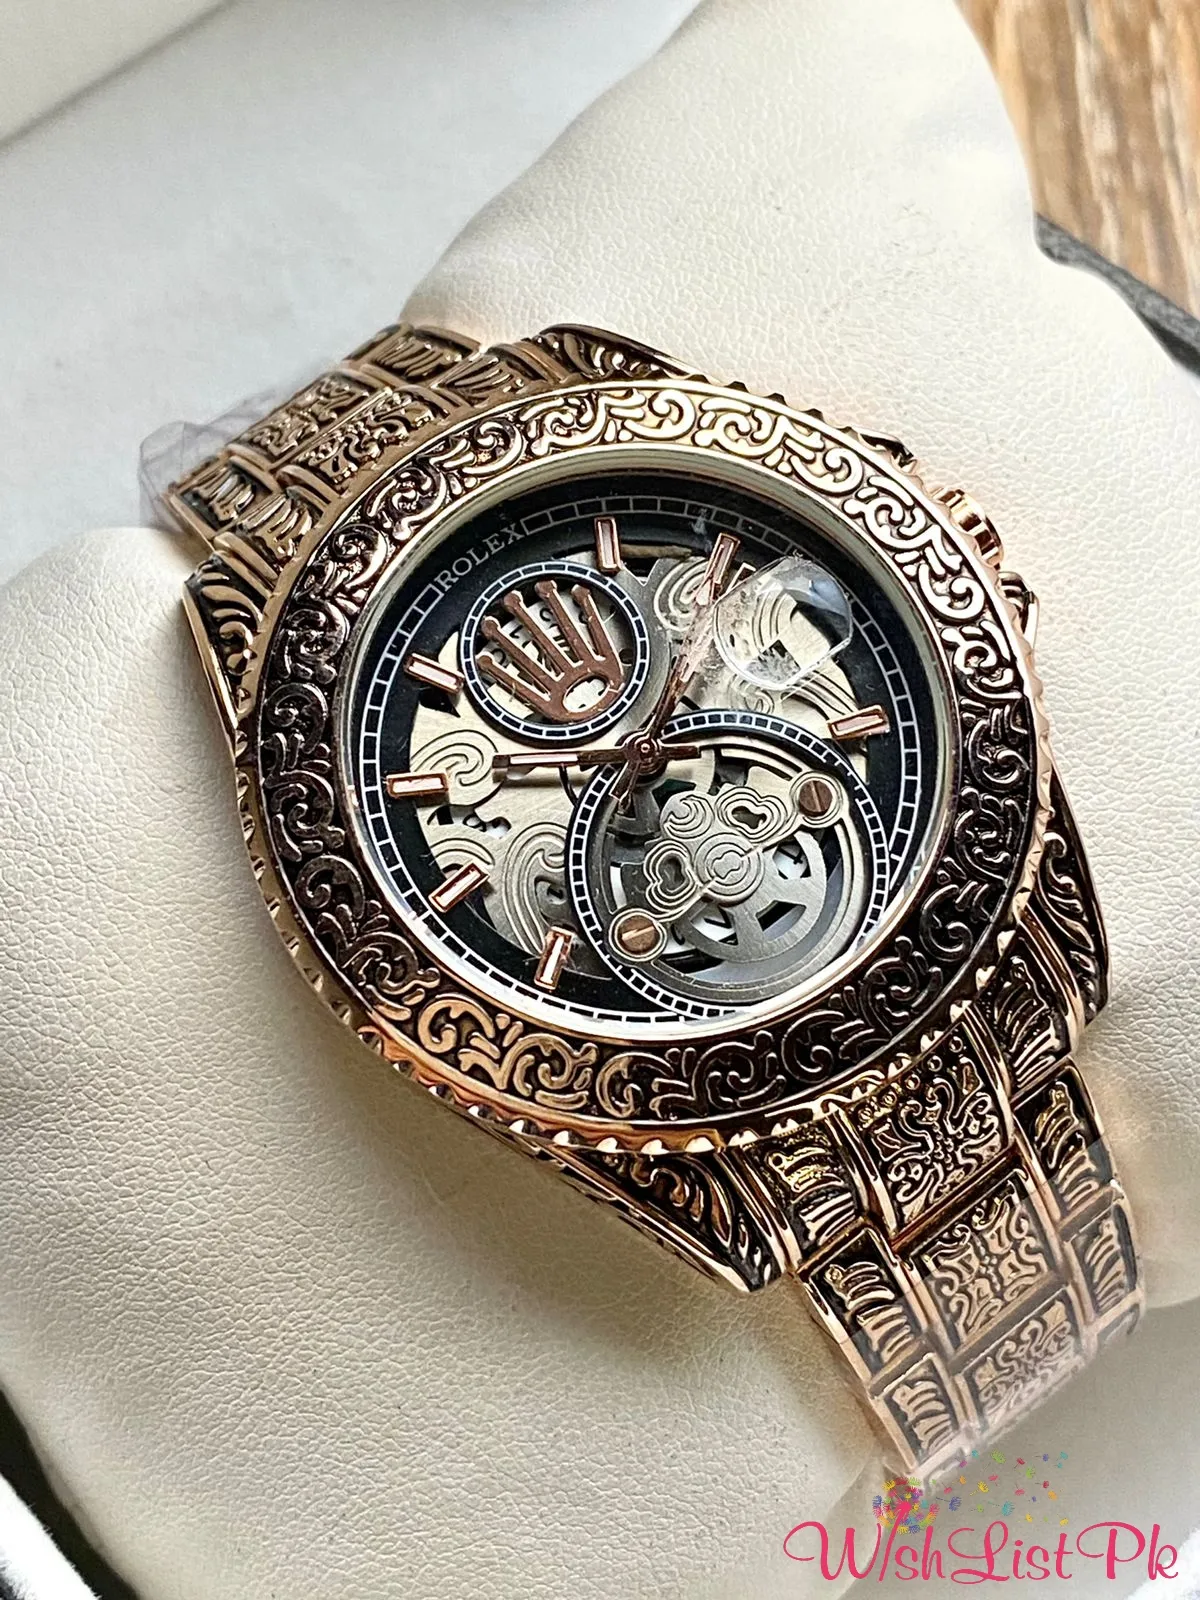 Best Price Rolex Antique Rosegold Engraved Watch